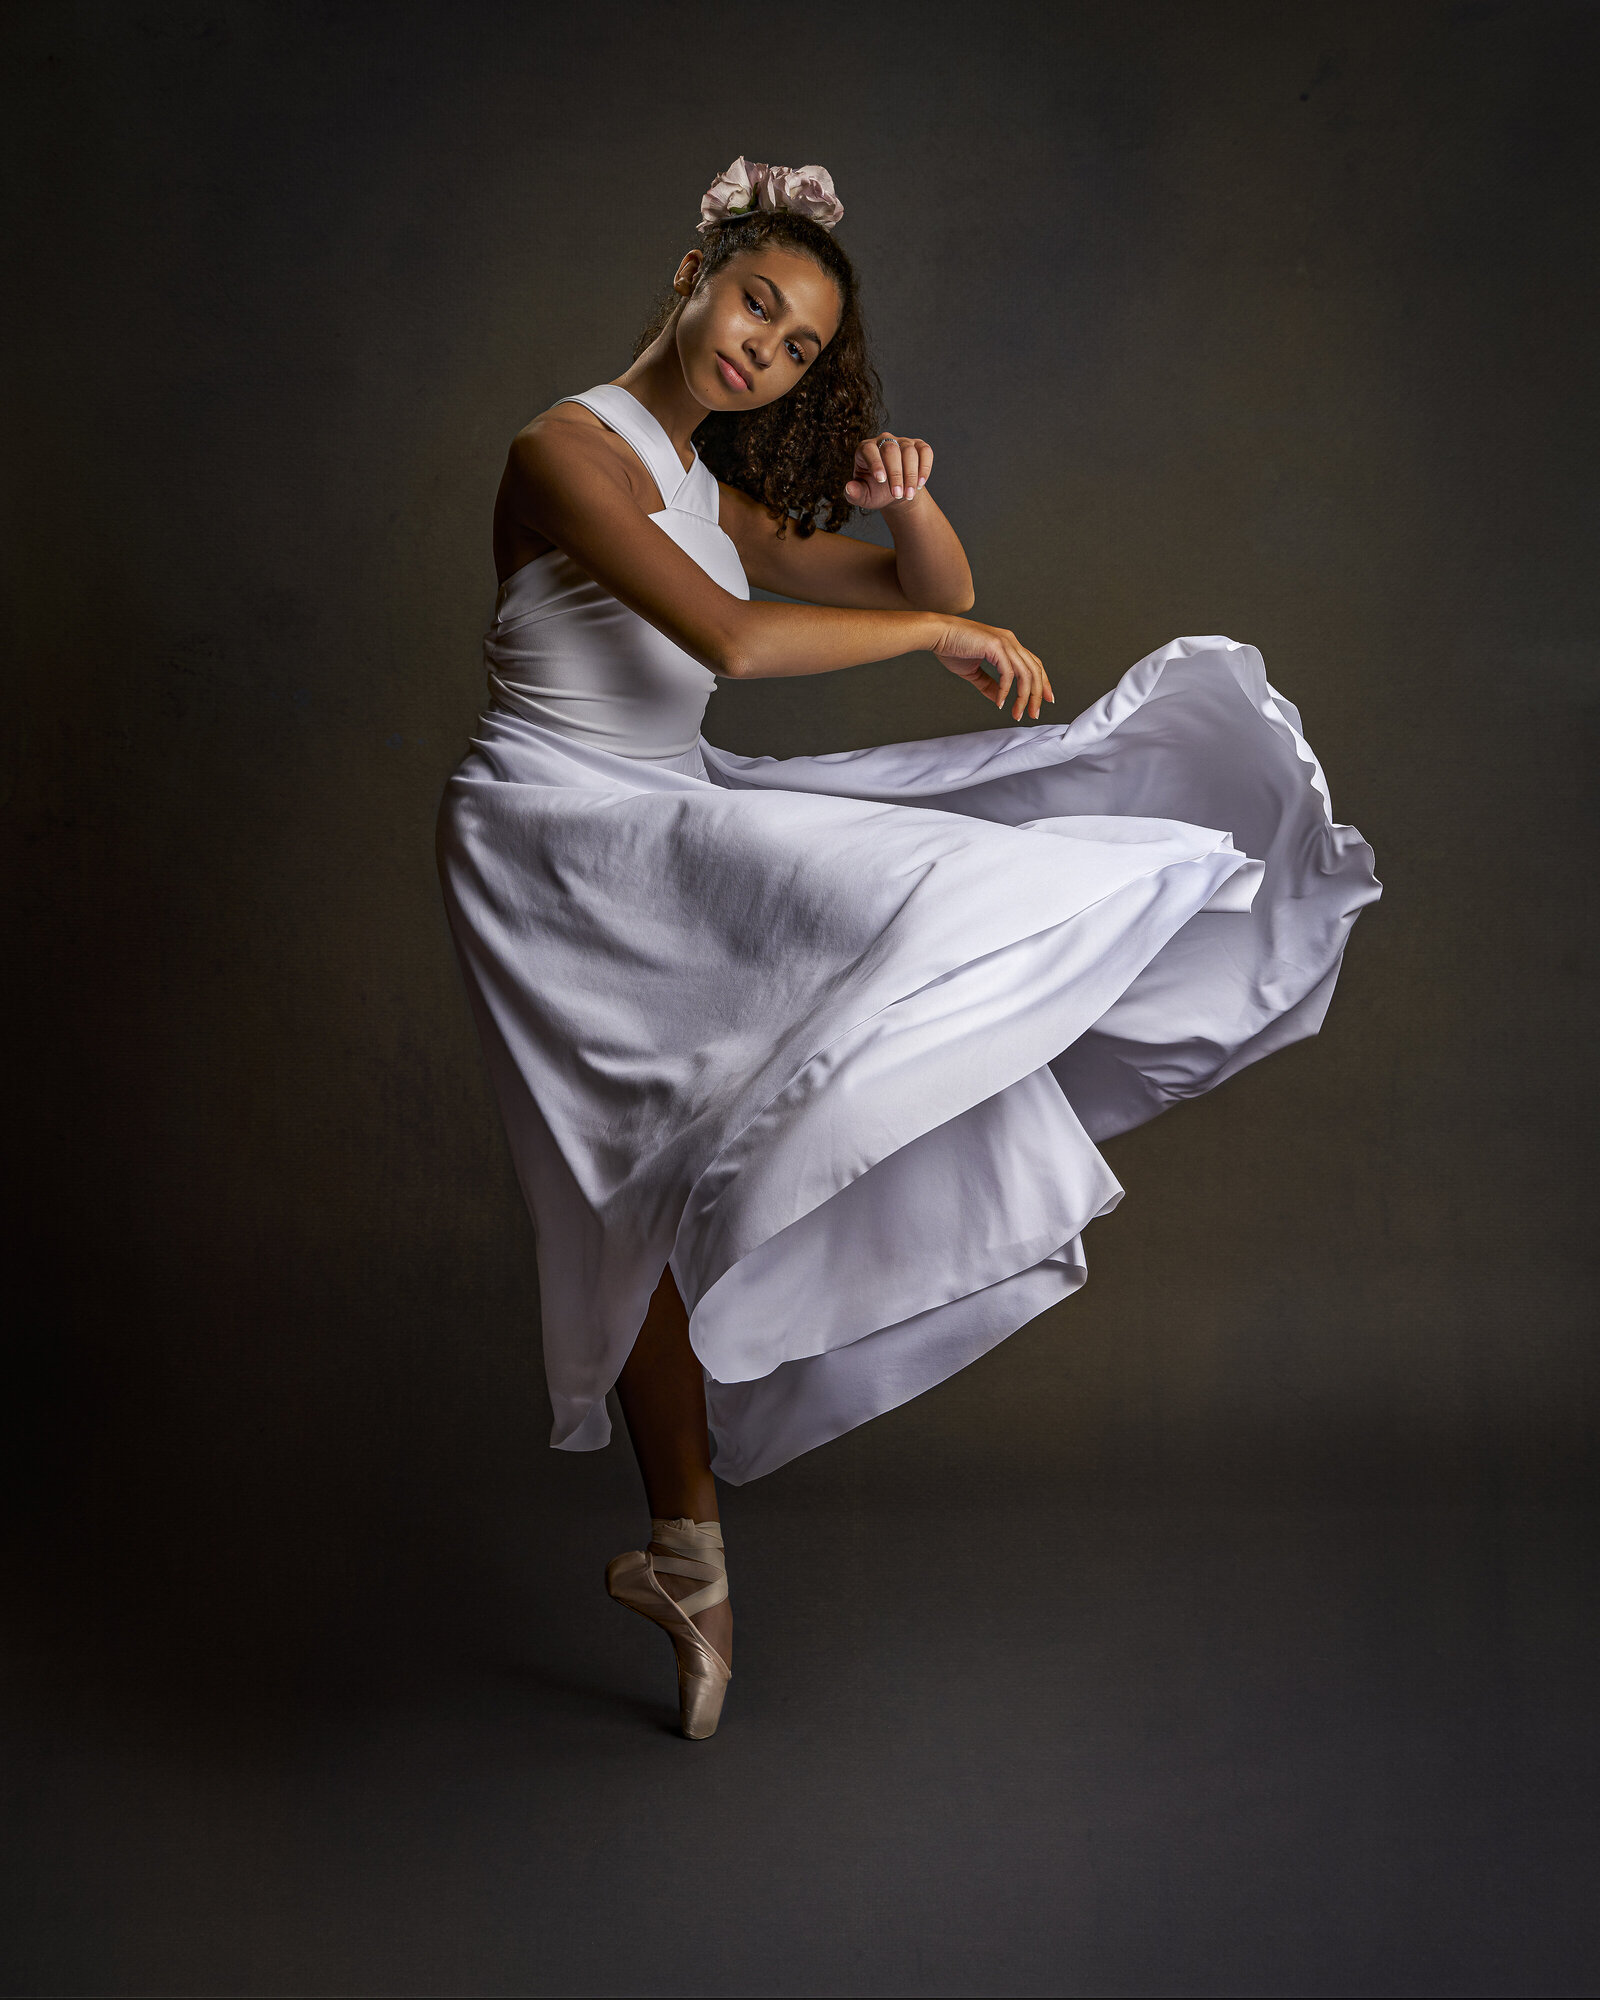 Dancer portrait with white skirt